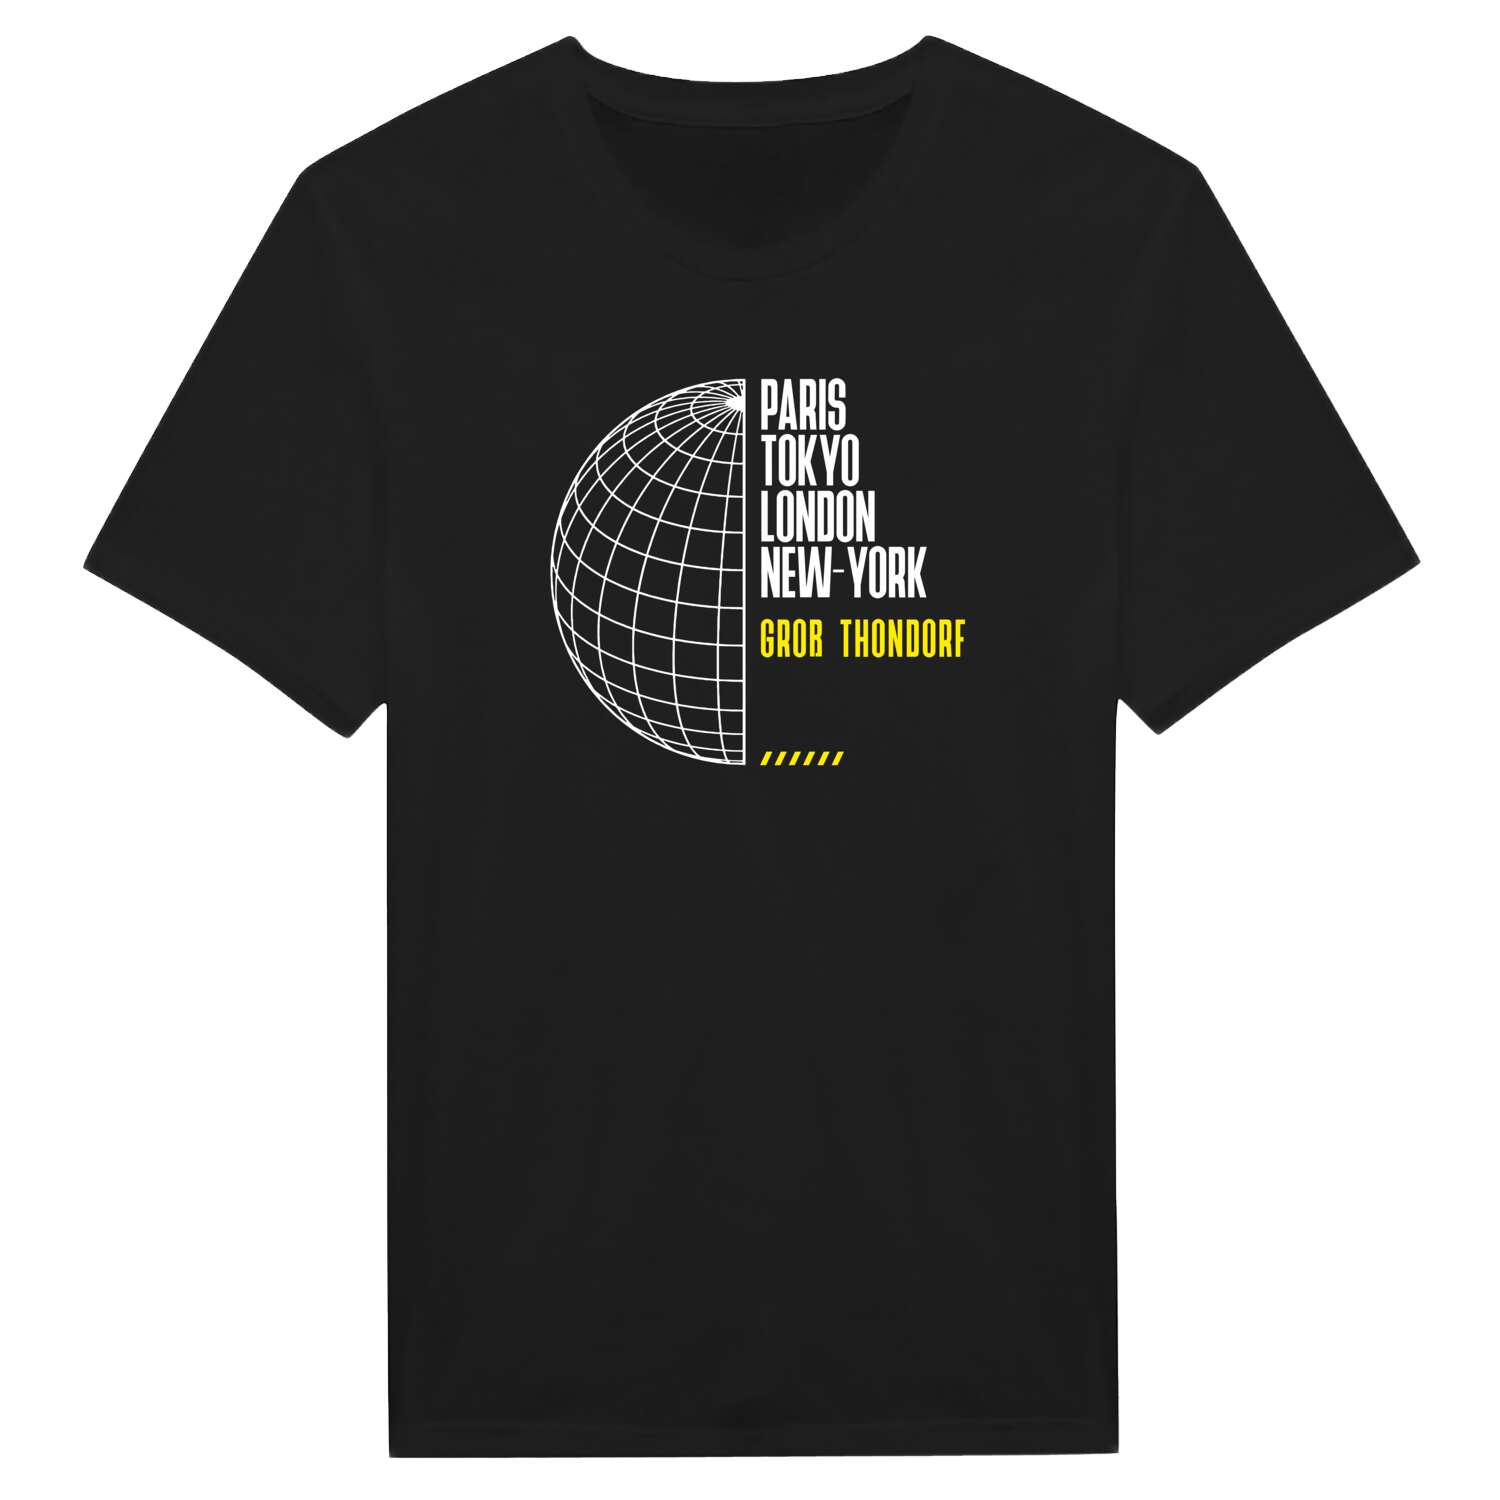 Groß Thondorf T-Shirt »Paris Tokyo London«